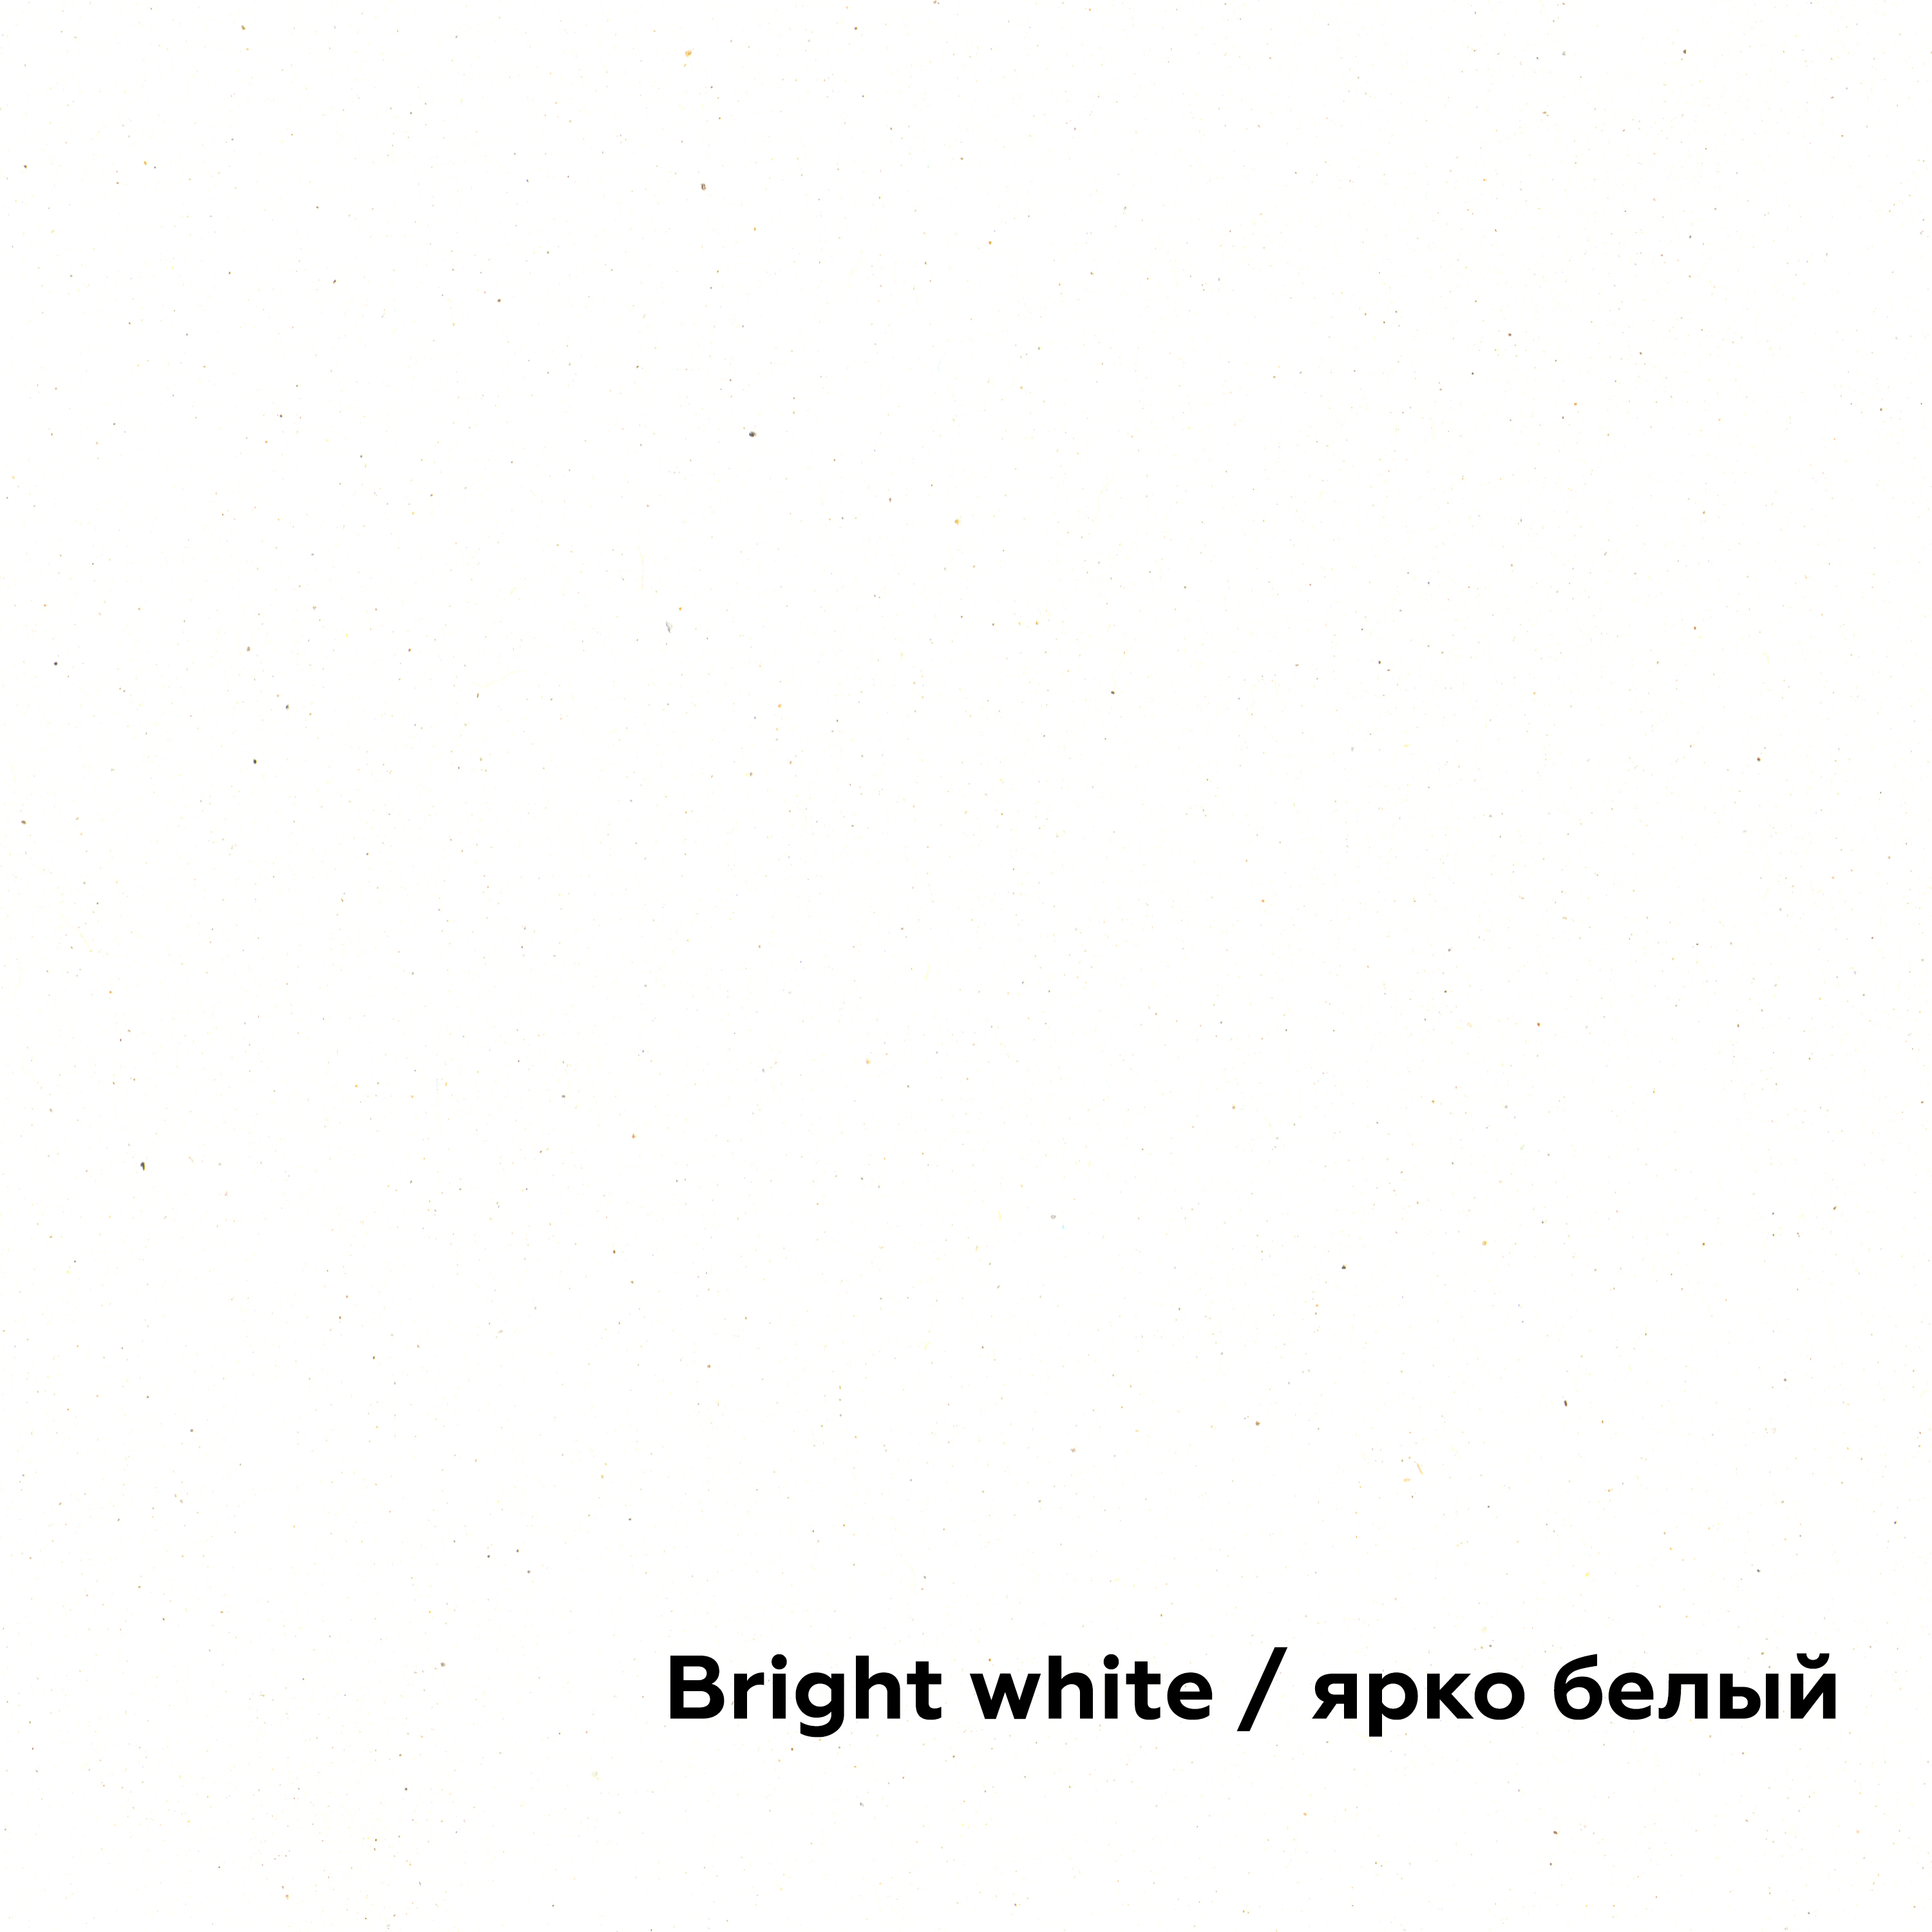 120-70X100-250-L SHIRO ECHO BRIGHT WHITE ЯРКО-БЕЛЫЙ бумага